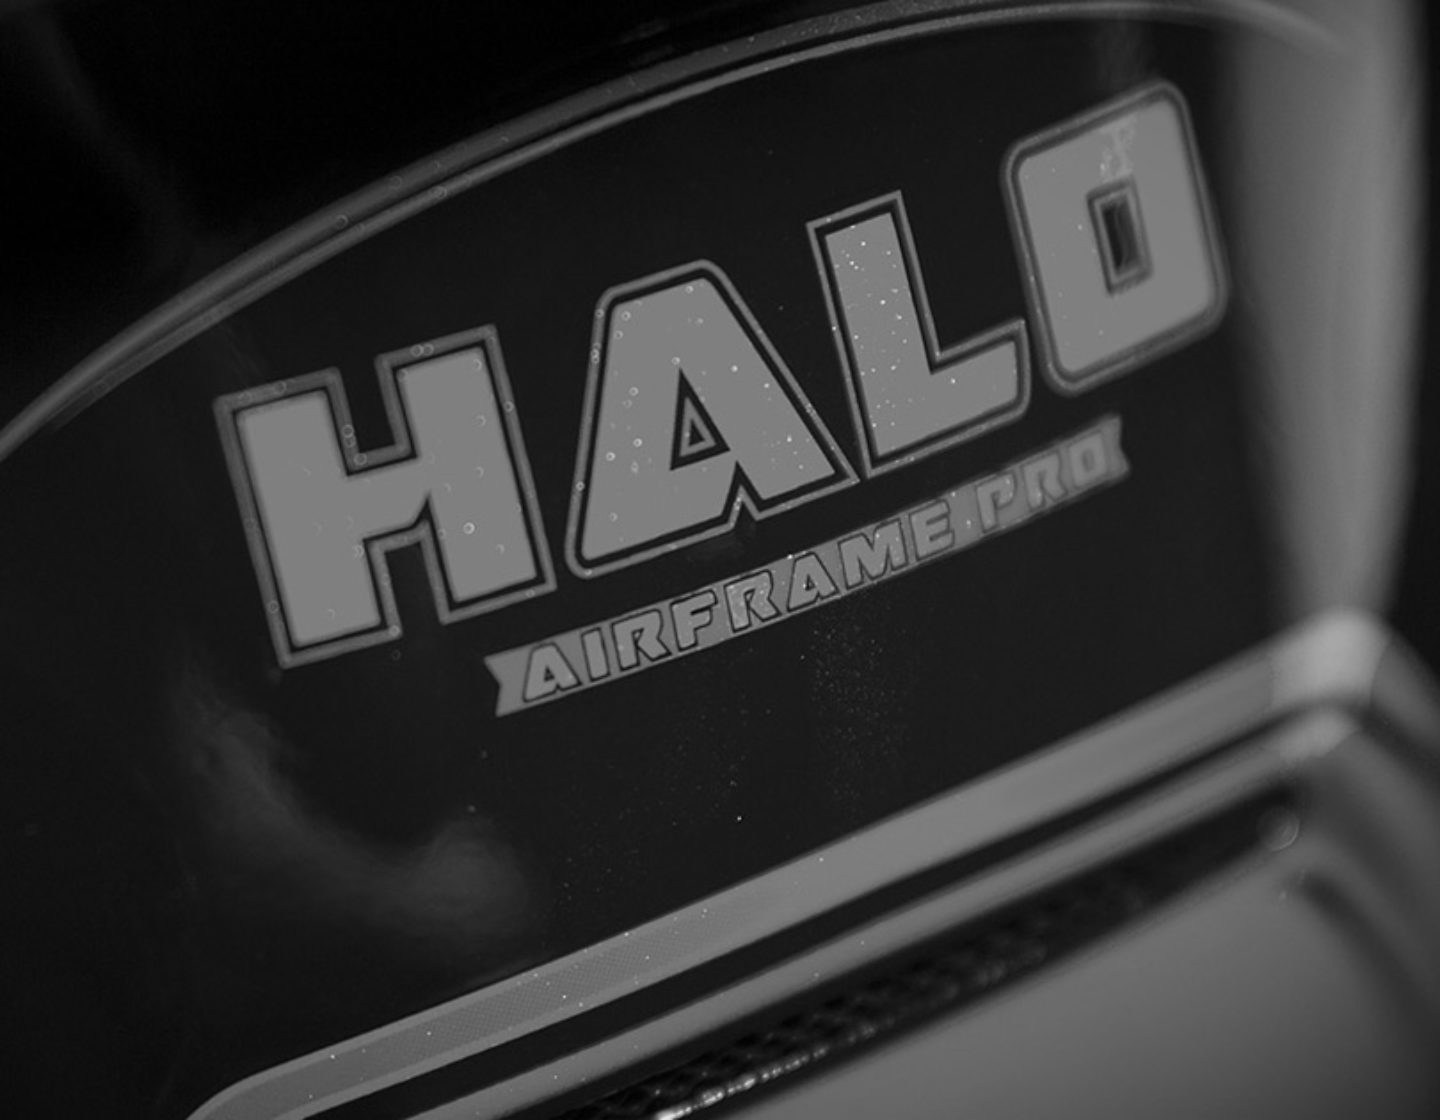 Icon Airframe Pro Halo шлем - черный